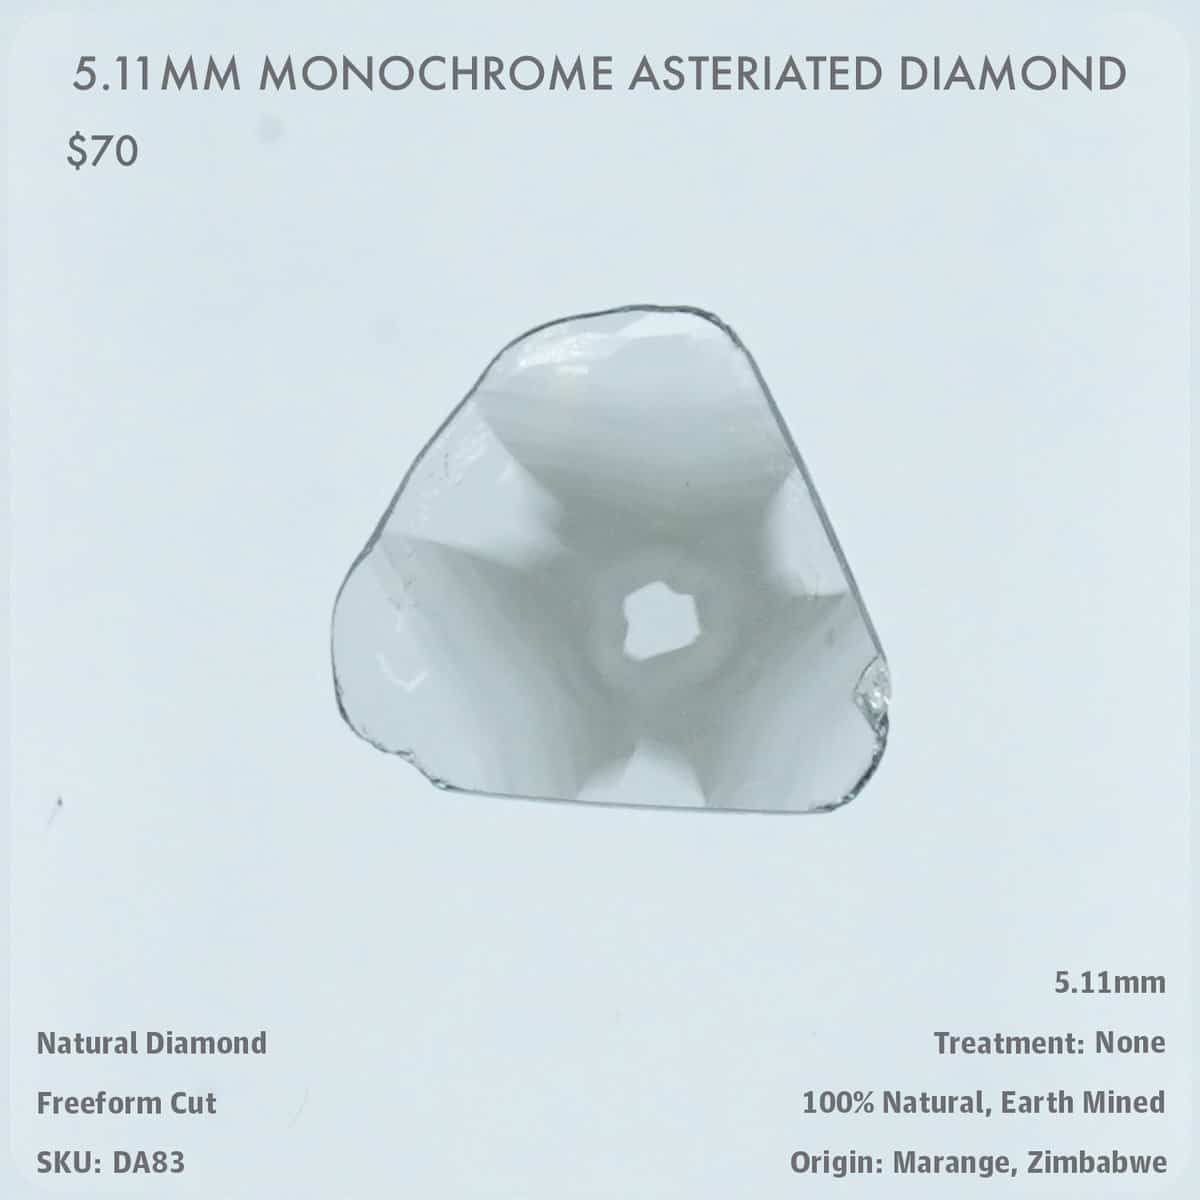 5.11mm Monochrome Asteriated Diamond